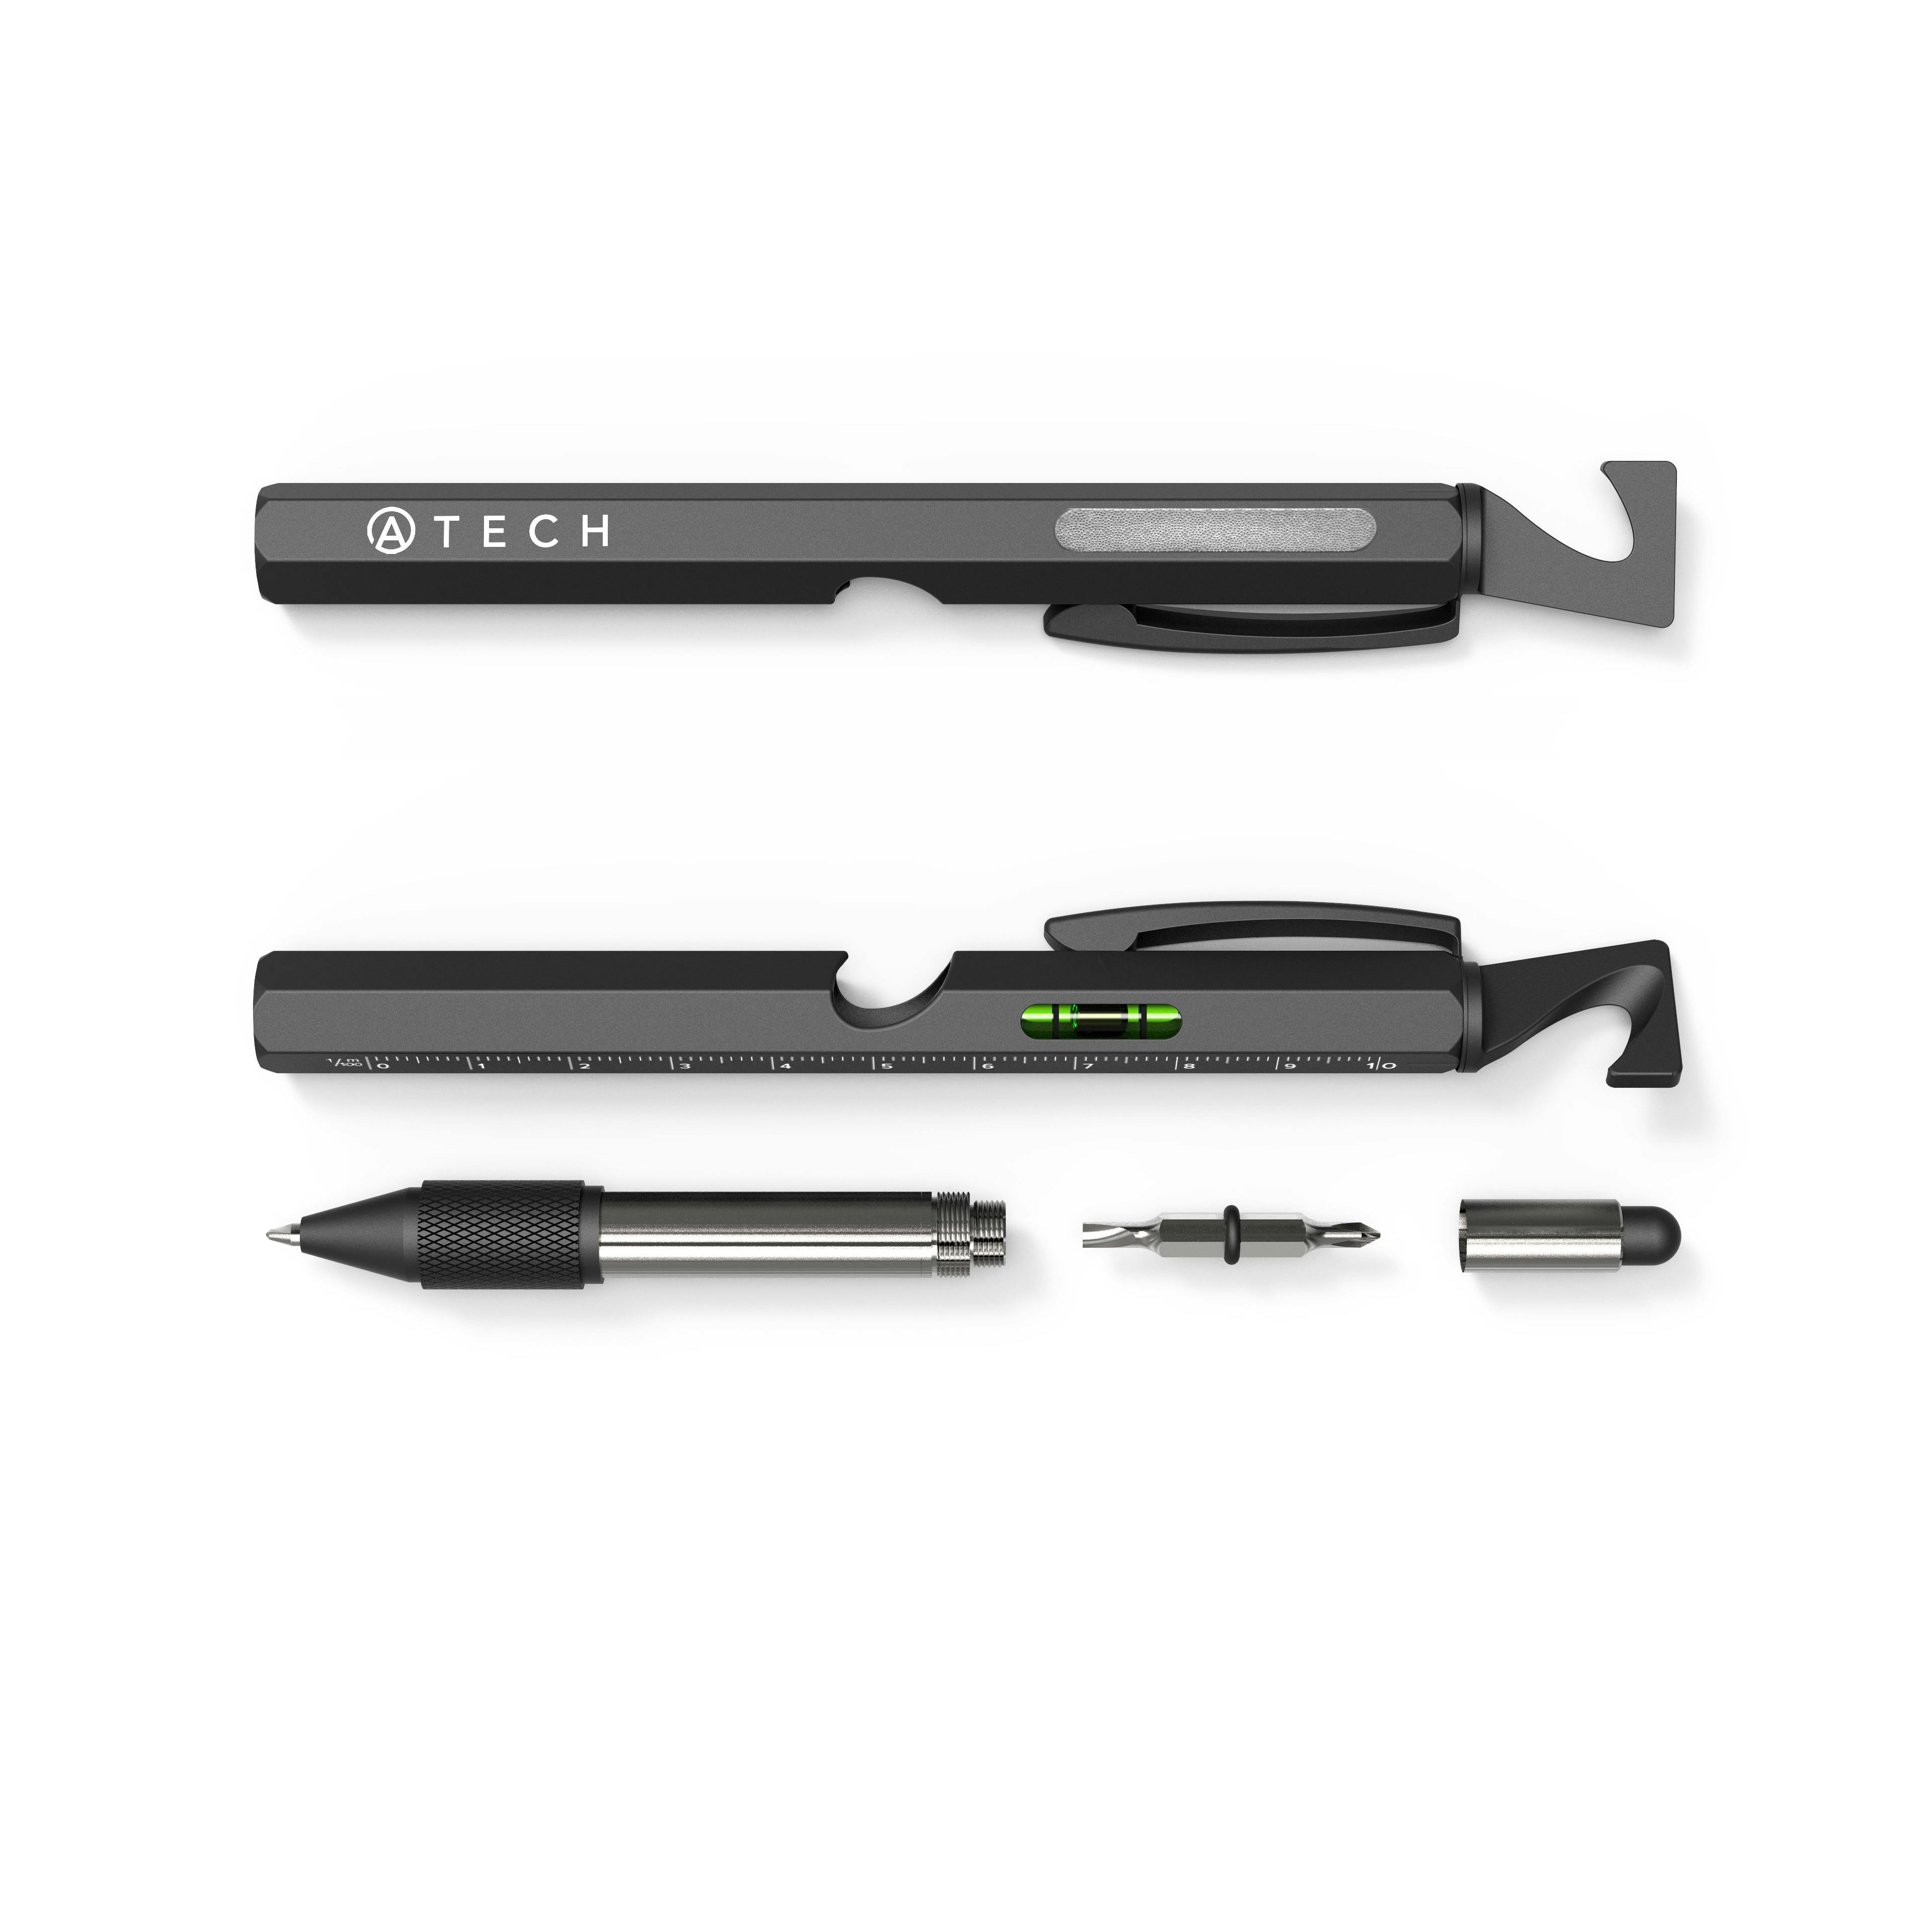 Atech Innovation Multitool Pen 9-in-1 Box Cutter - Black